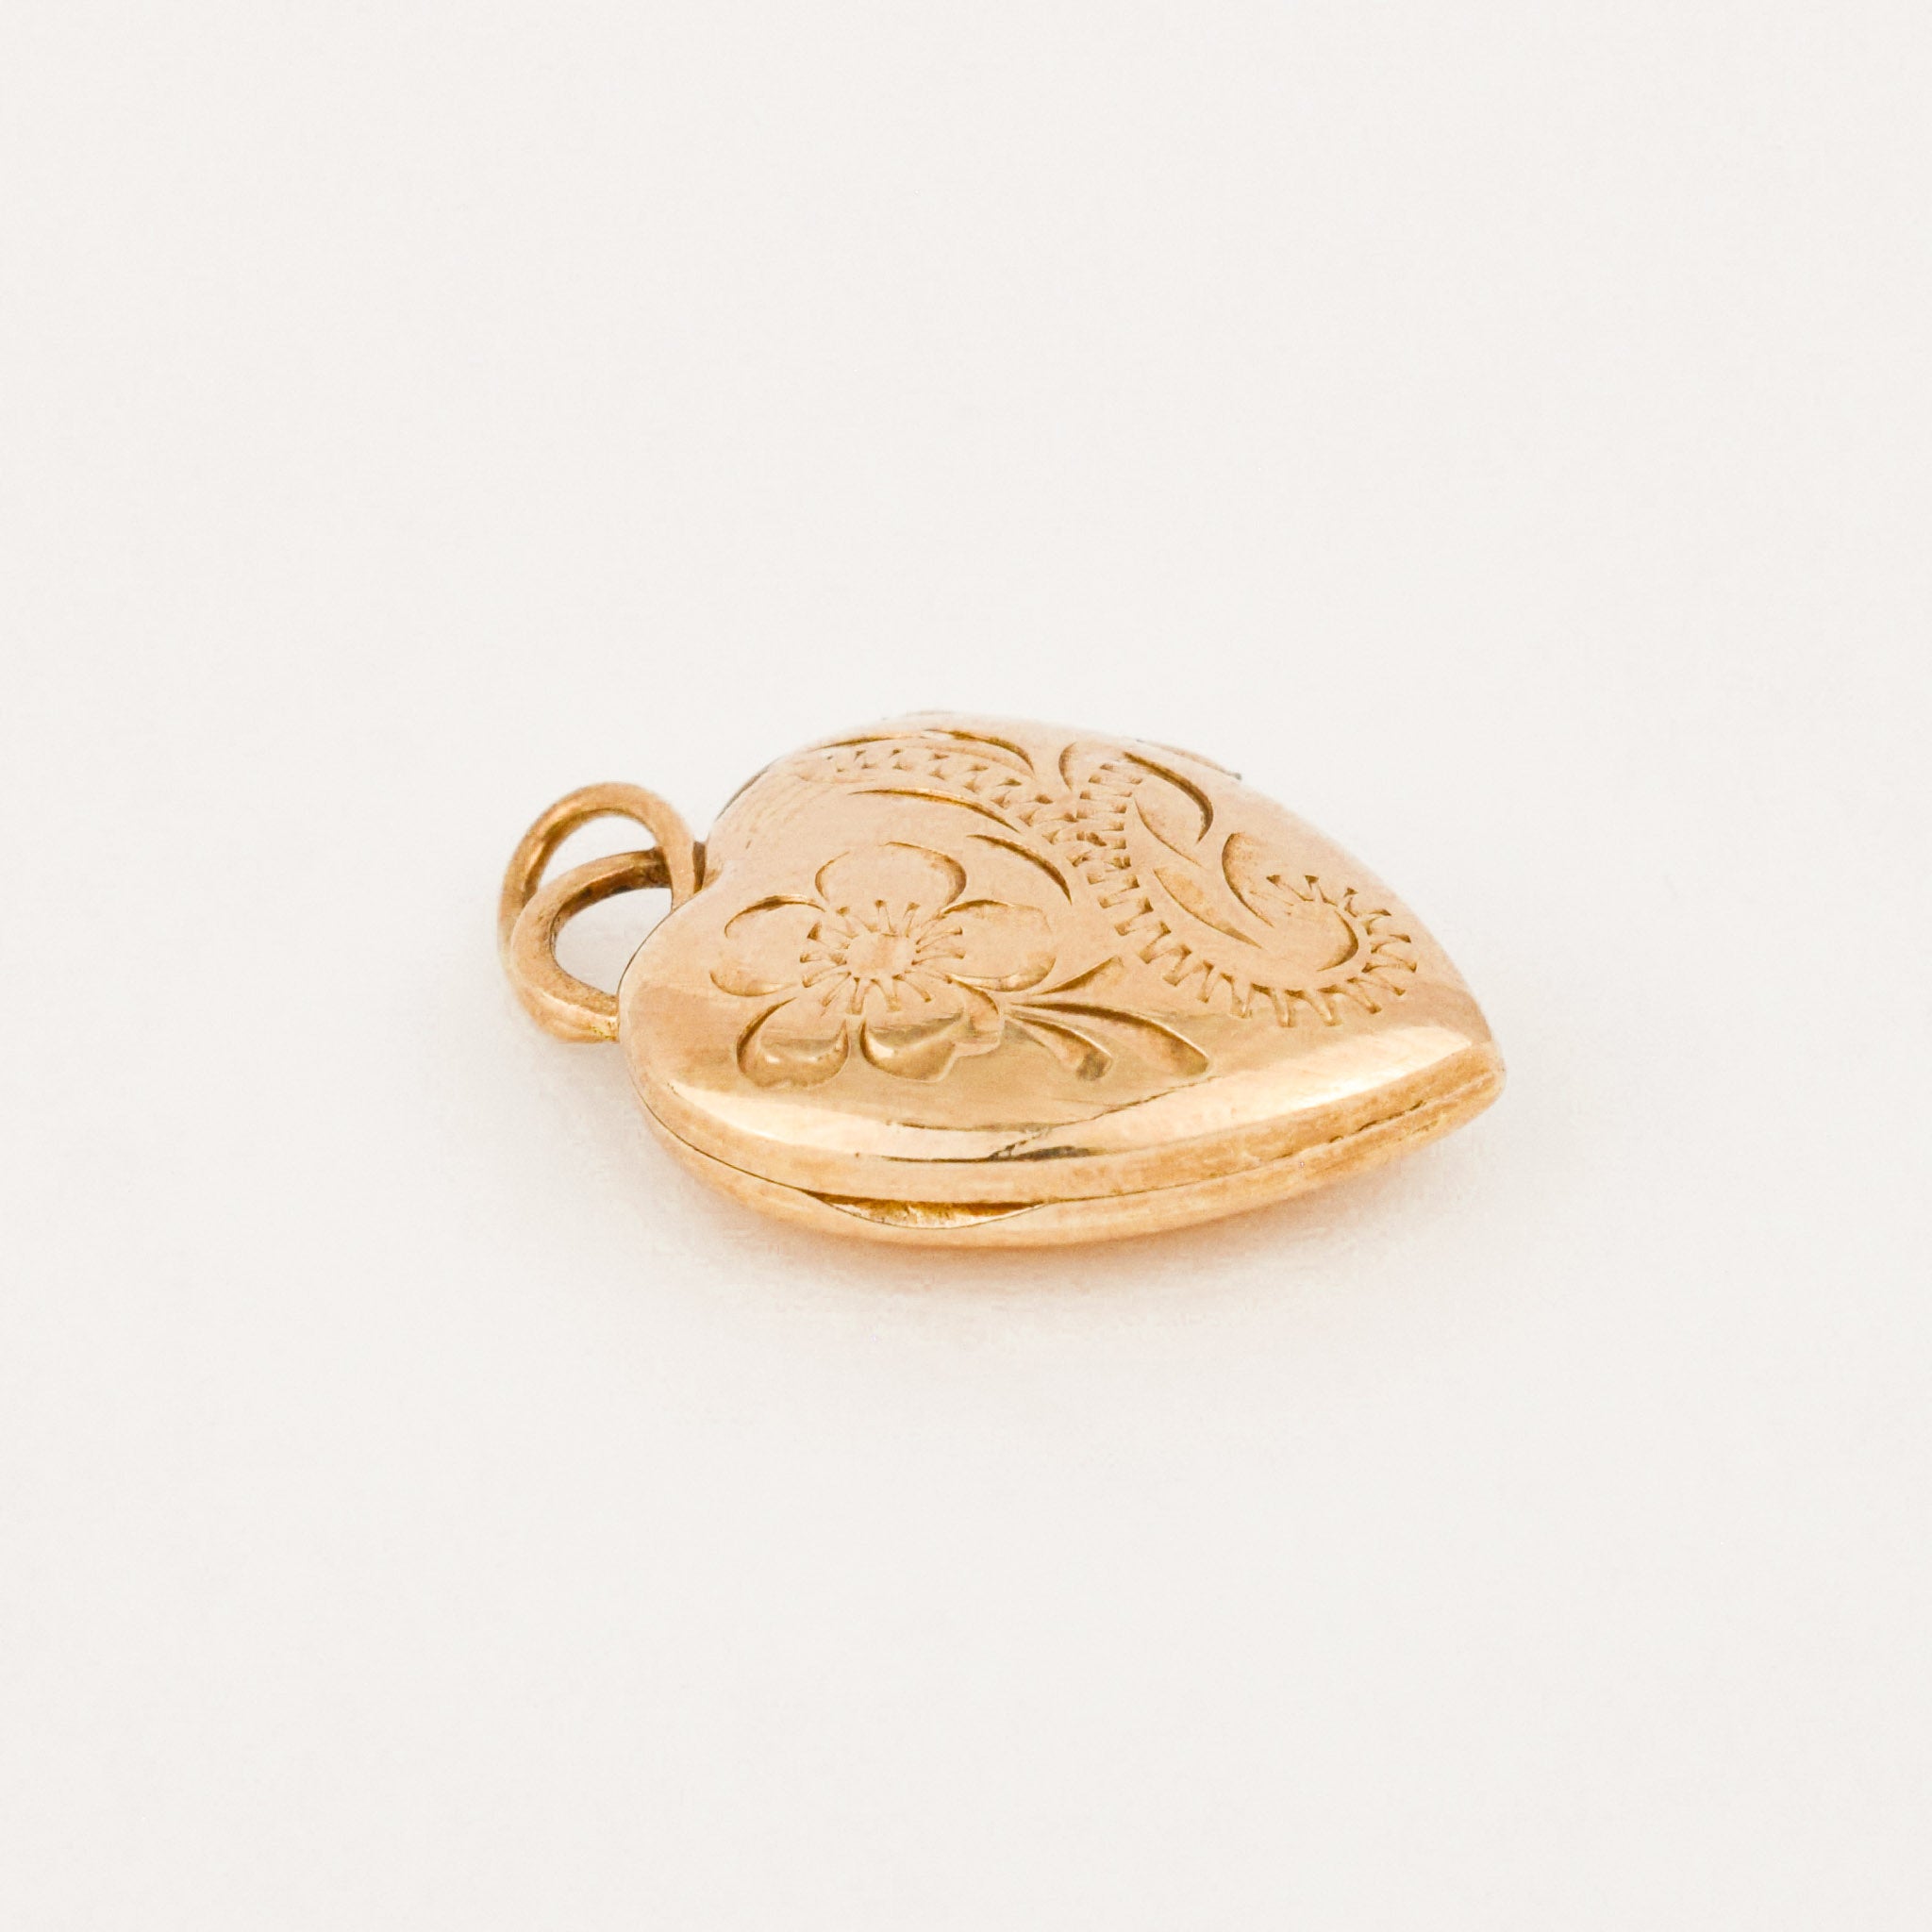 vintage gold heart locket pendant